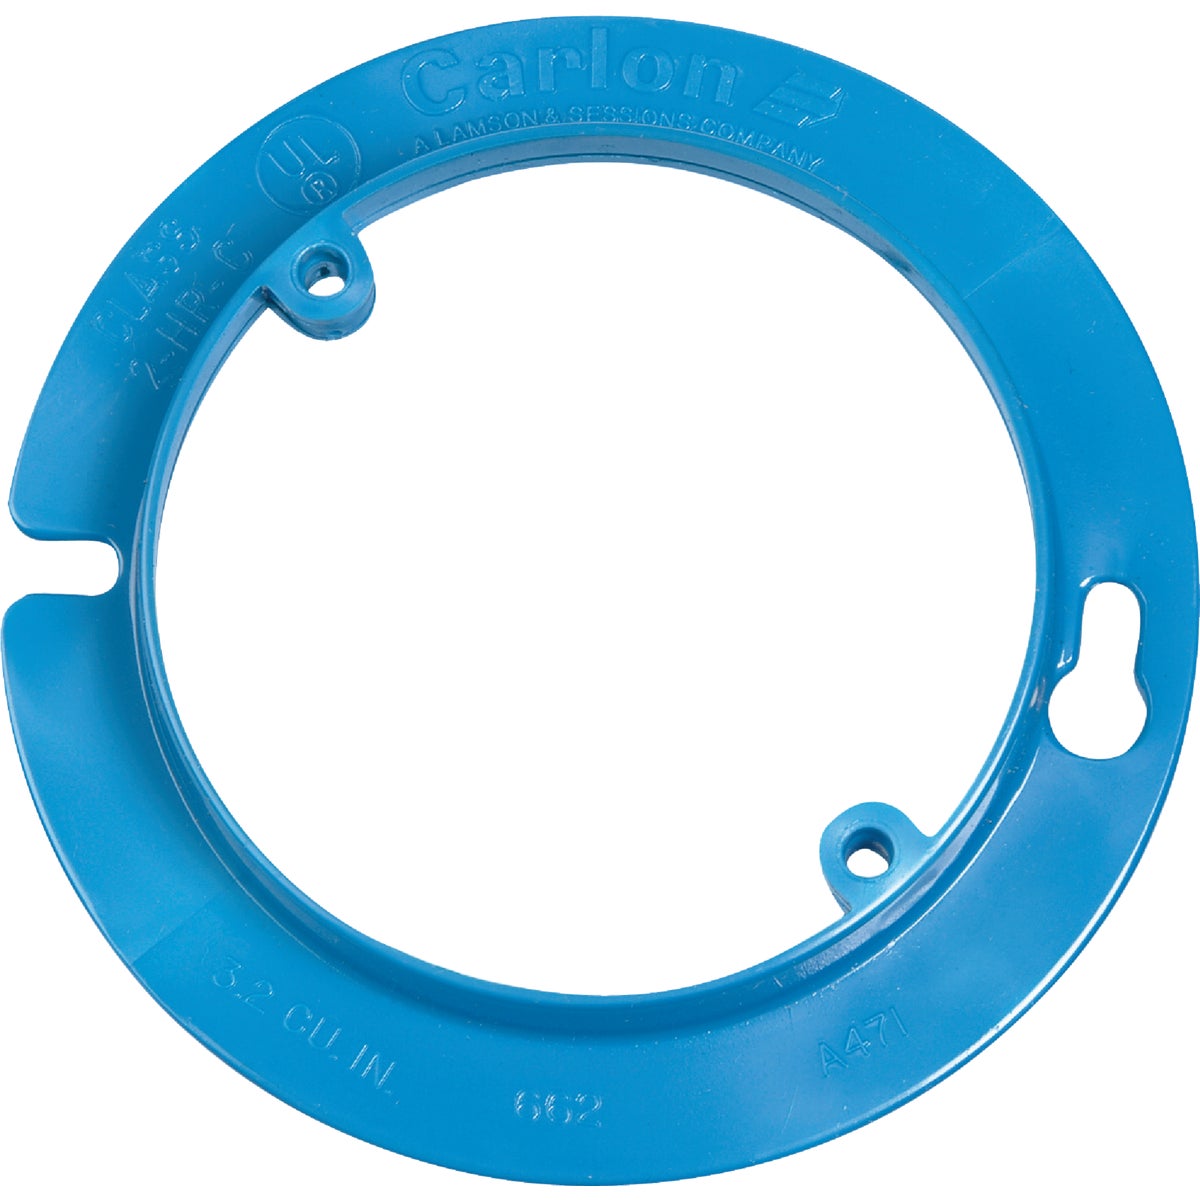 Item 540269, PVC (polyvinyl chloride), raised, round, open ring box cover.